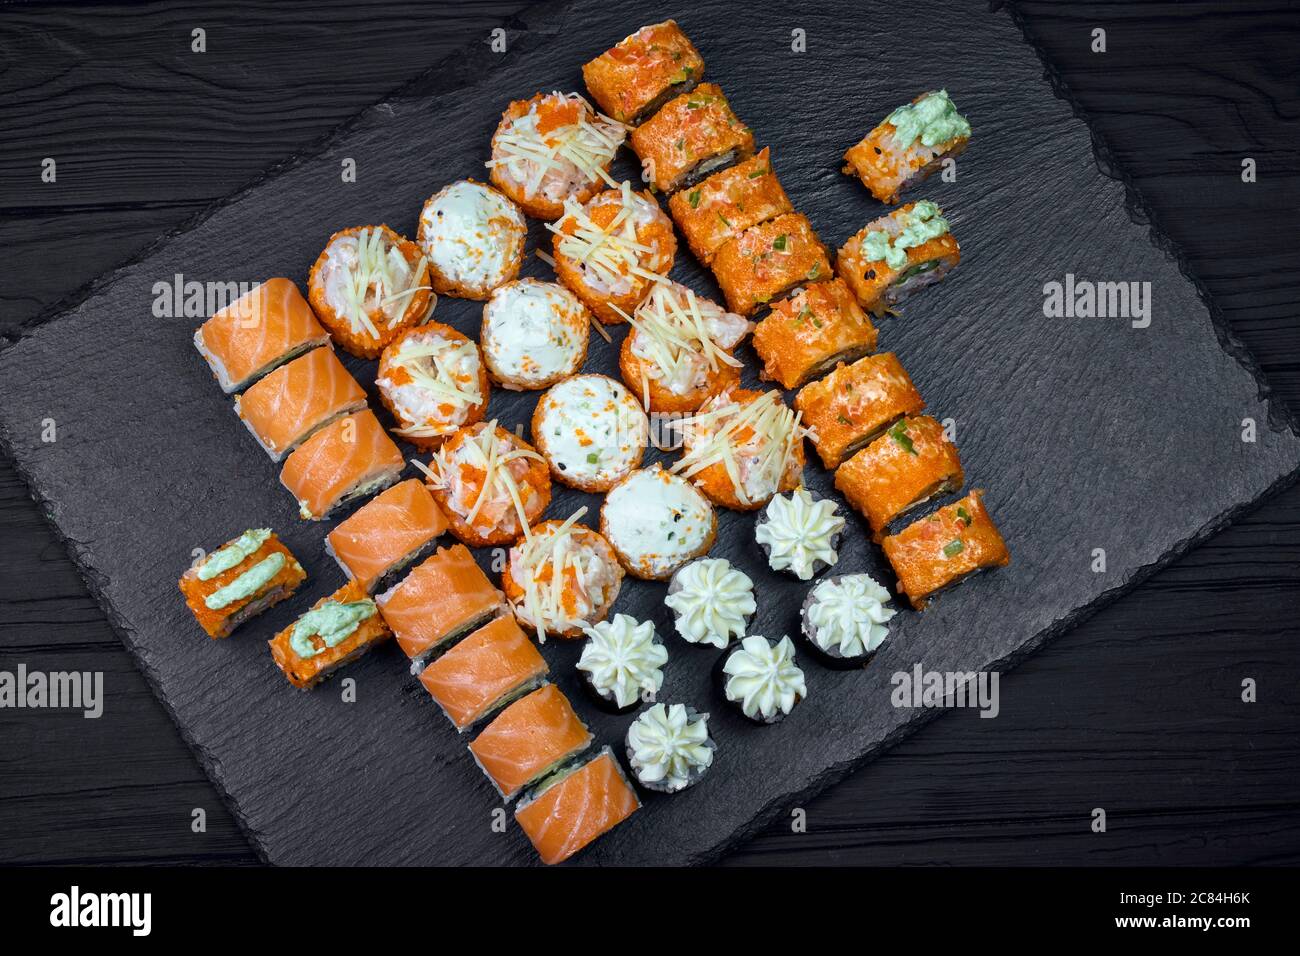 https://c8.alamy.com/comp/2C84H6K/appetizing-big-set-sushi-on-a-black-background-2C84H6K.jpg